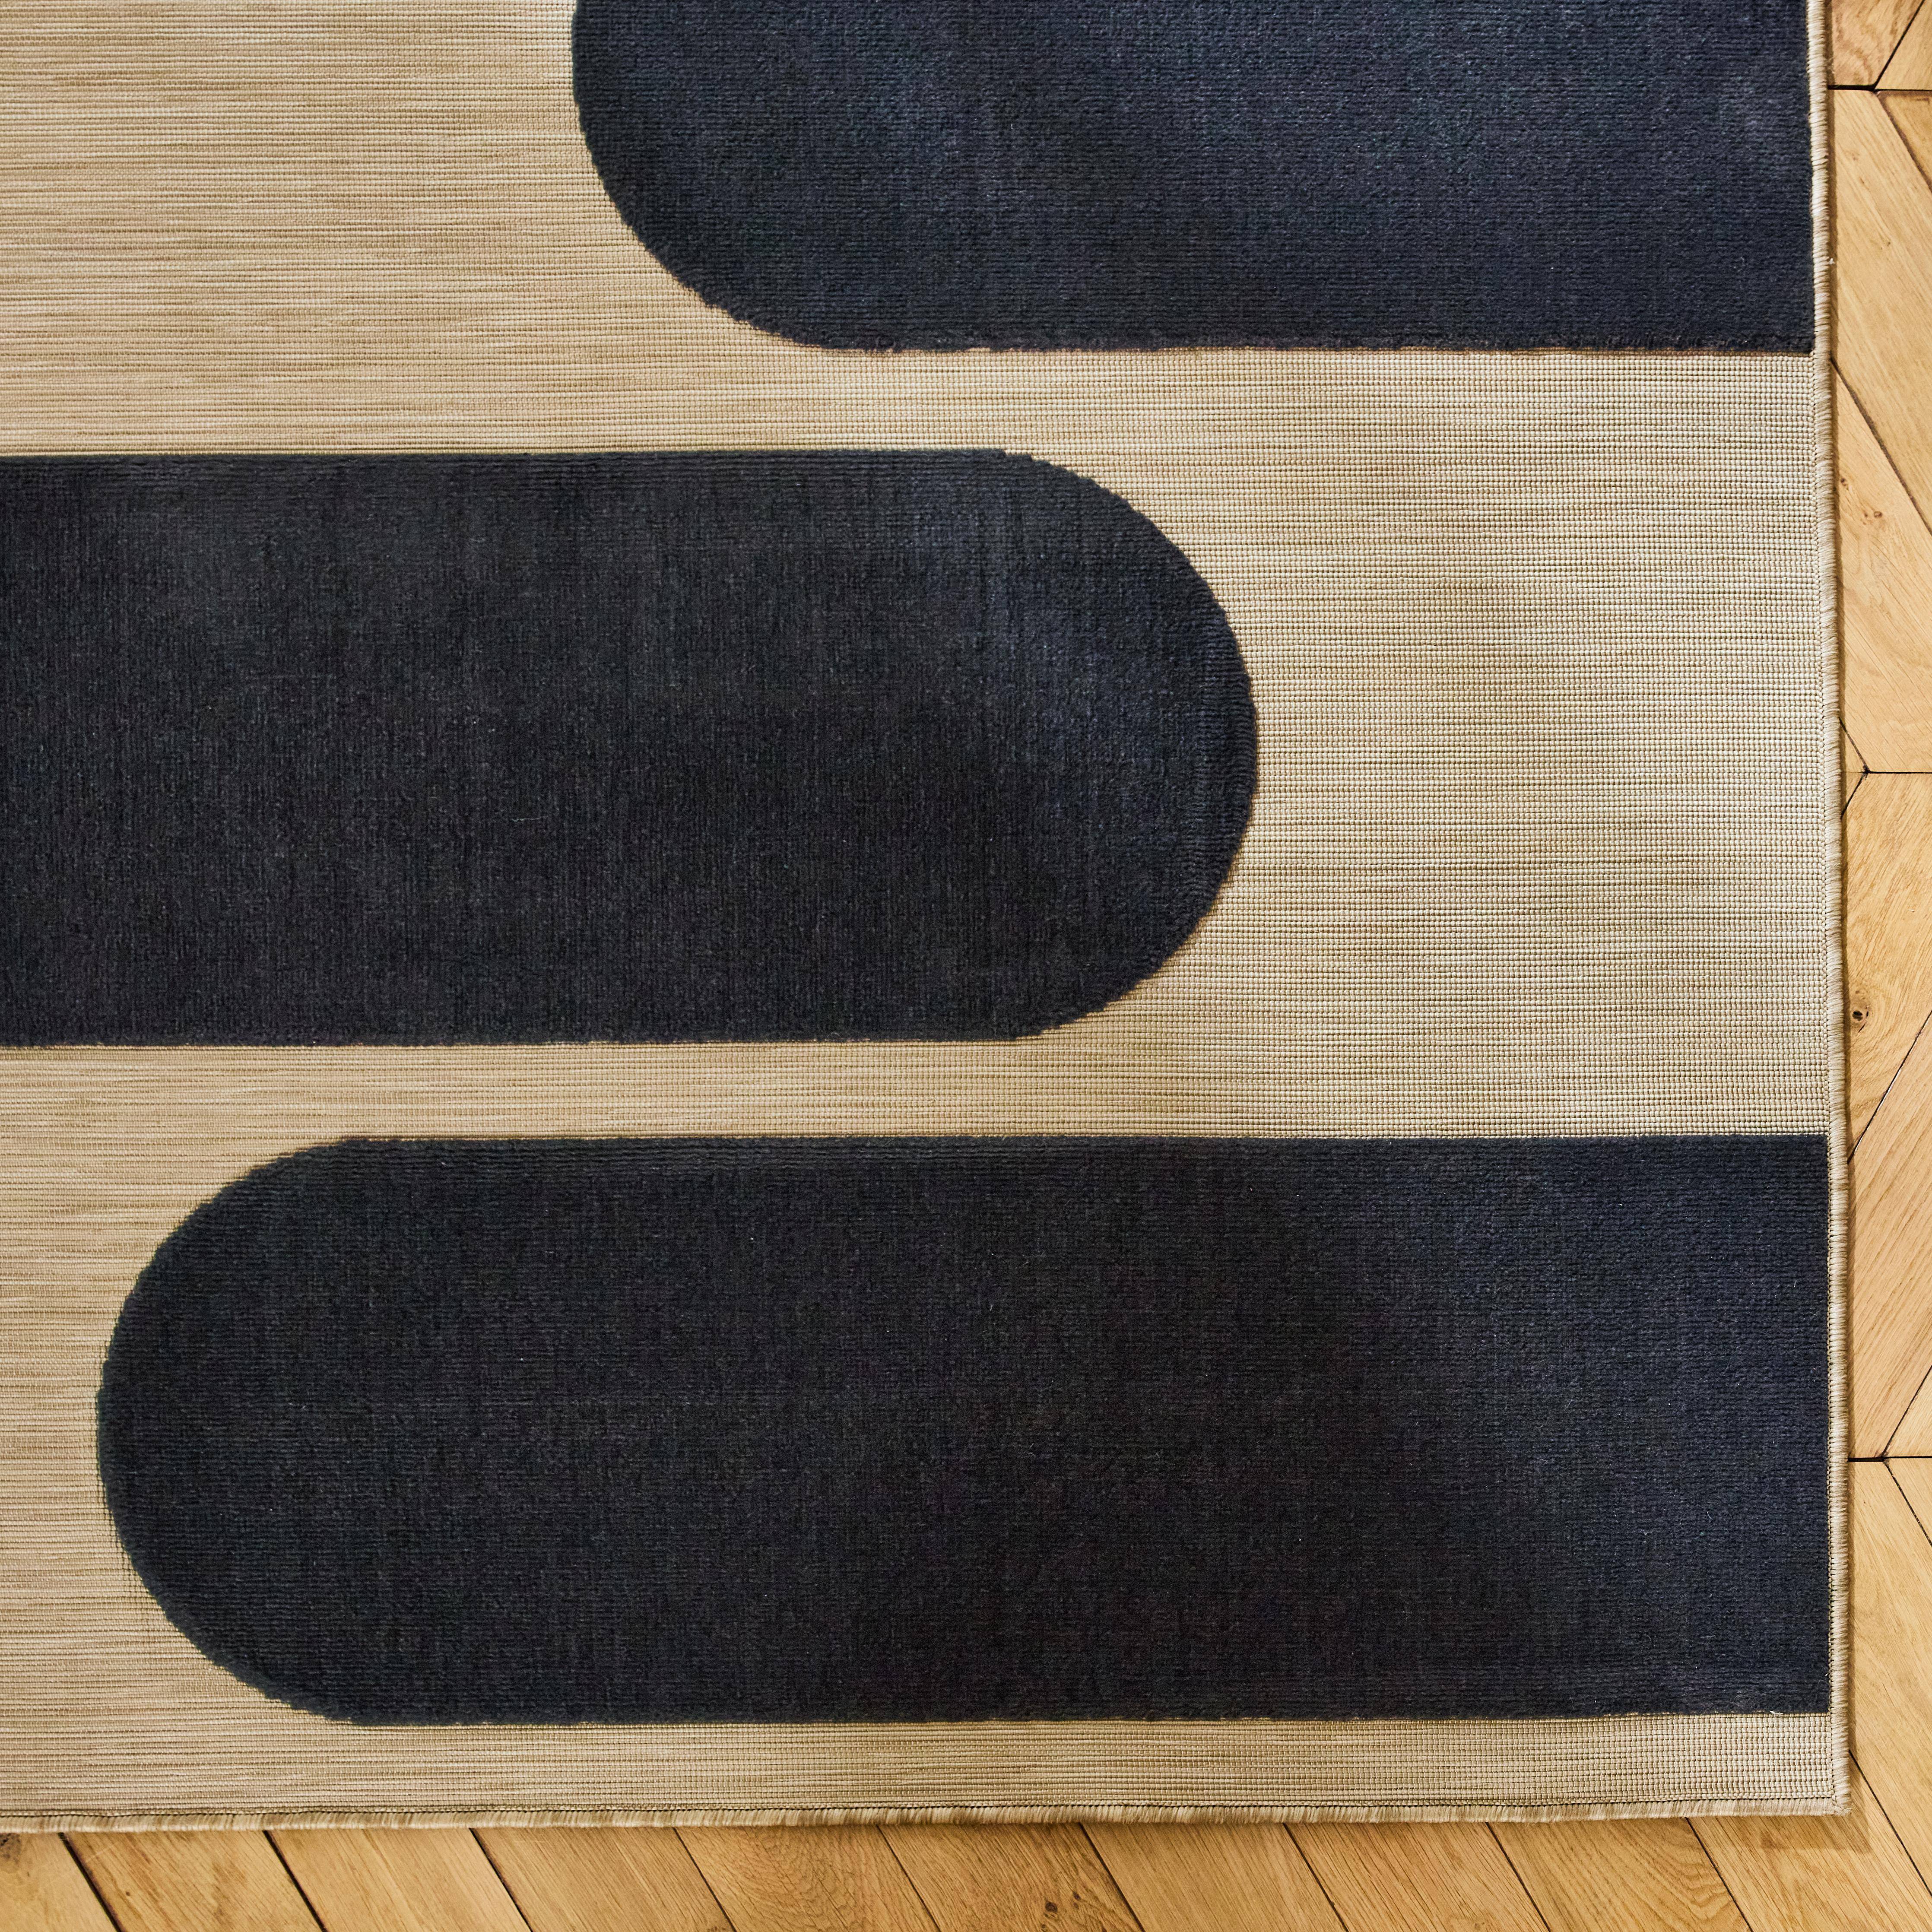 Beige interior/exterior rug with black geometric pattern, Anton, 160 x 230 cm Photo2